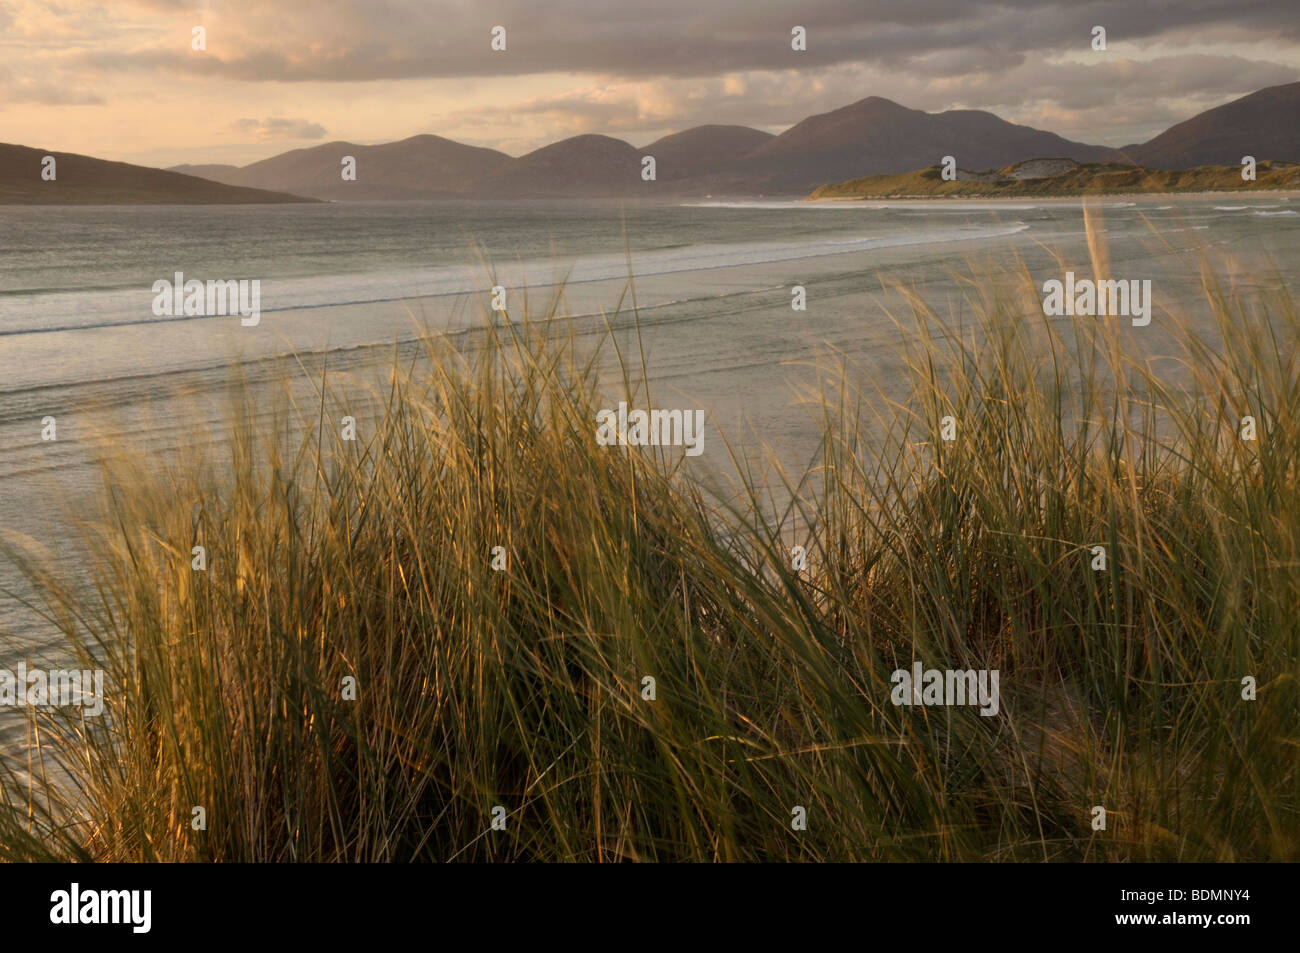 Tramonto da dune di sabbia, Traigh Losgaintir, Isle of Harris, Scozia Foto Stock